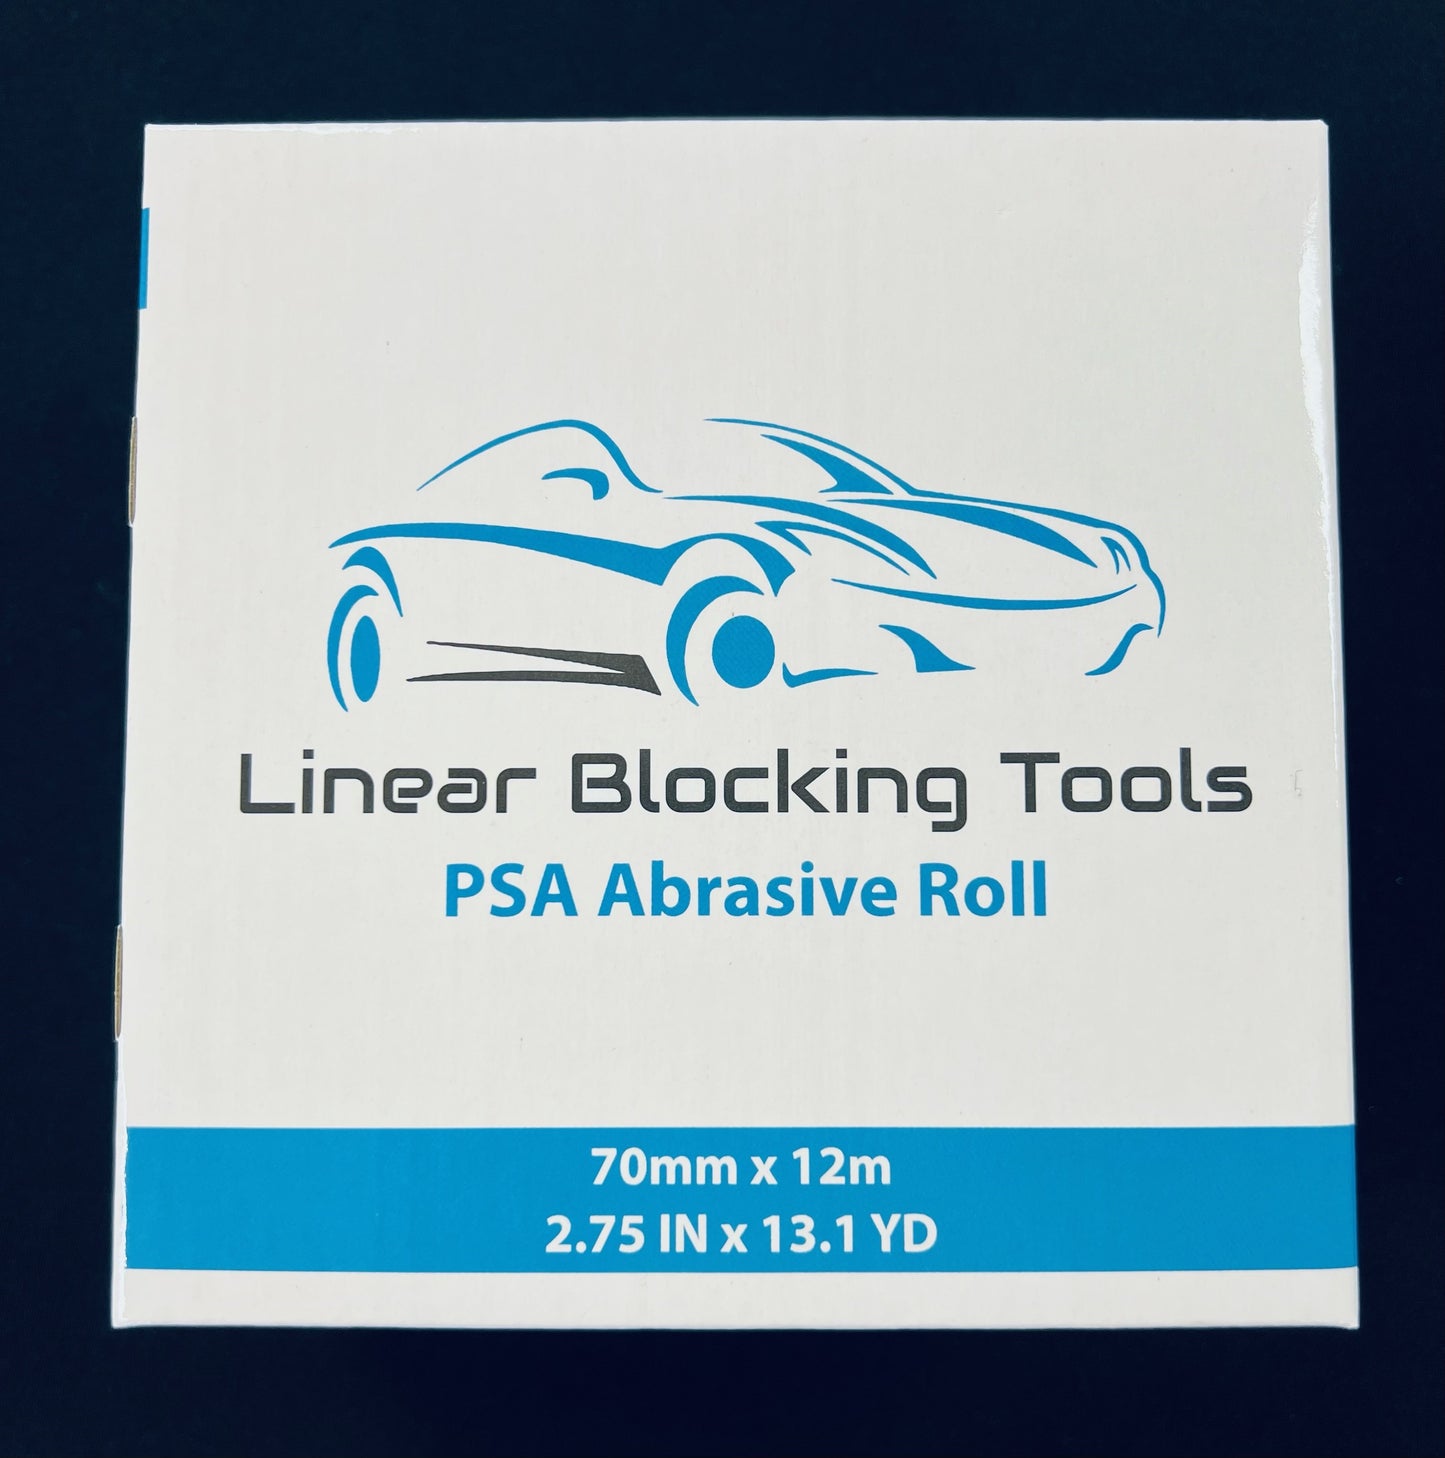 Linear Blocking Tools Nassschleifpapier 1500G